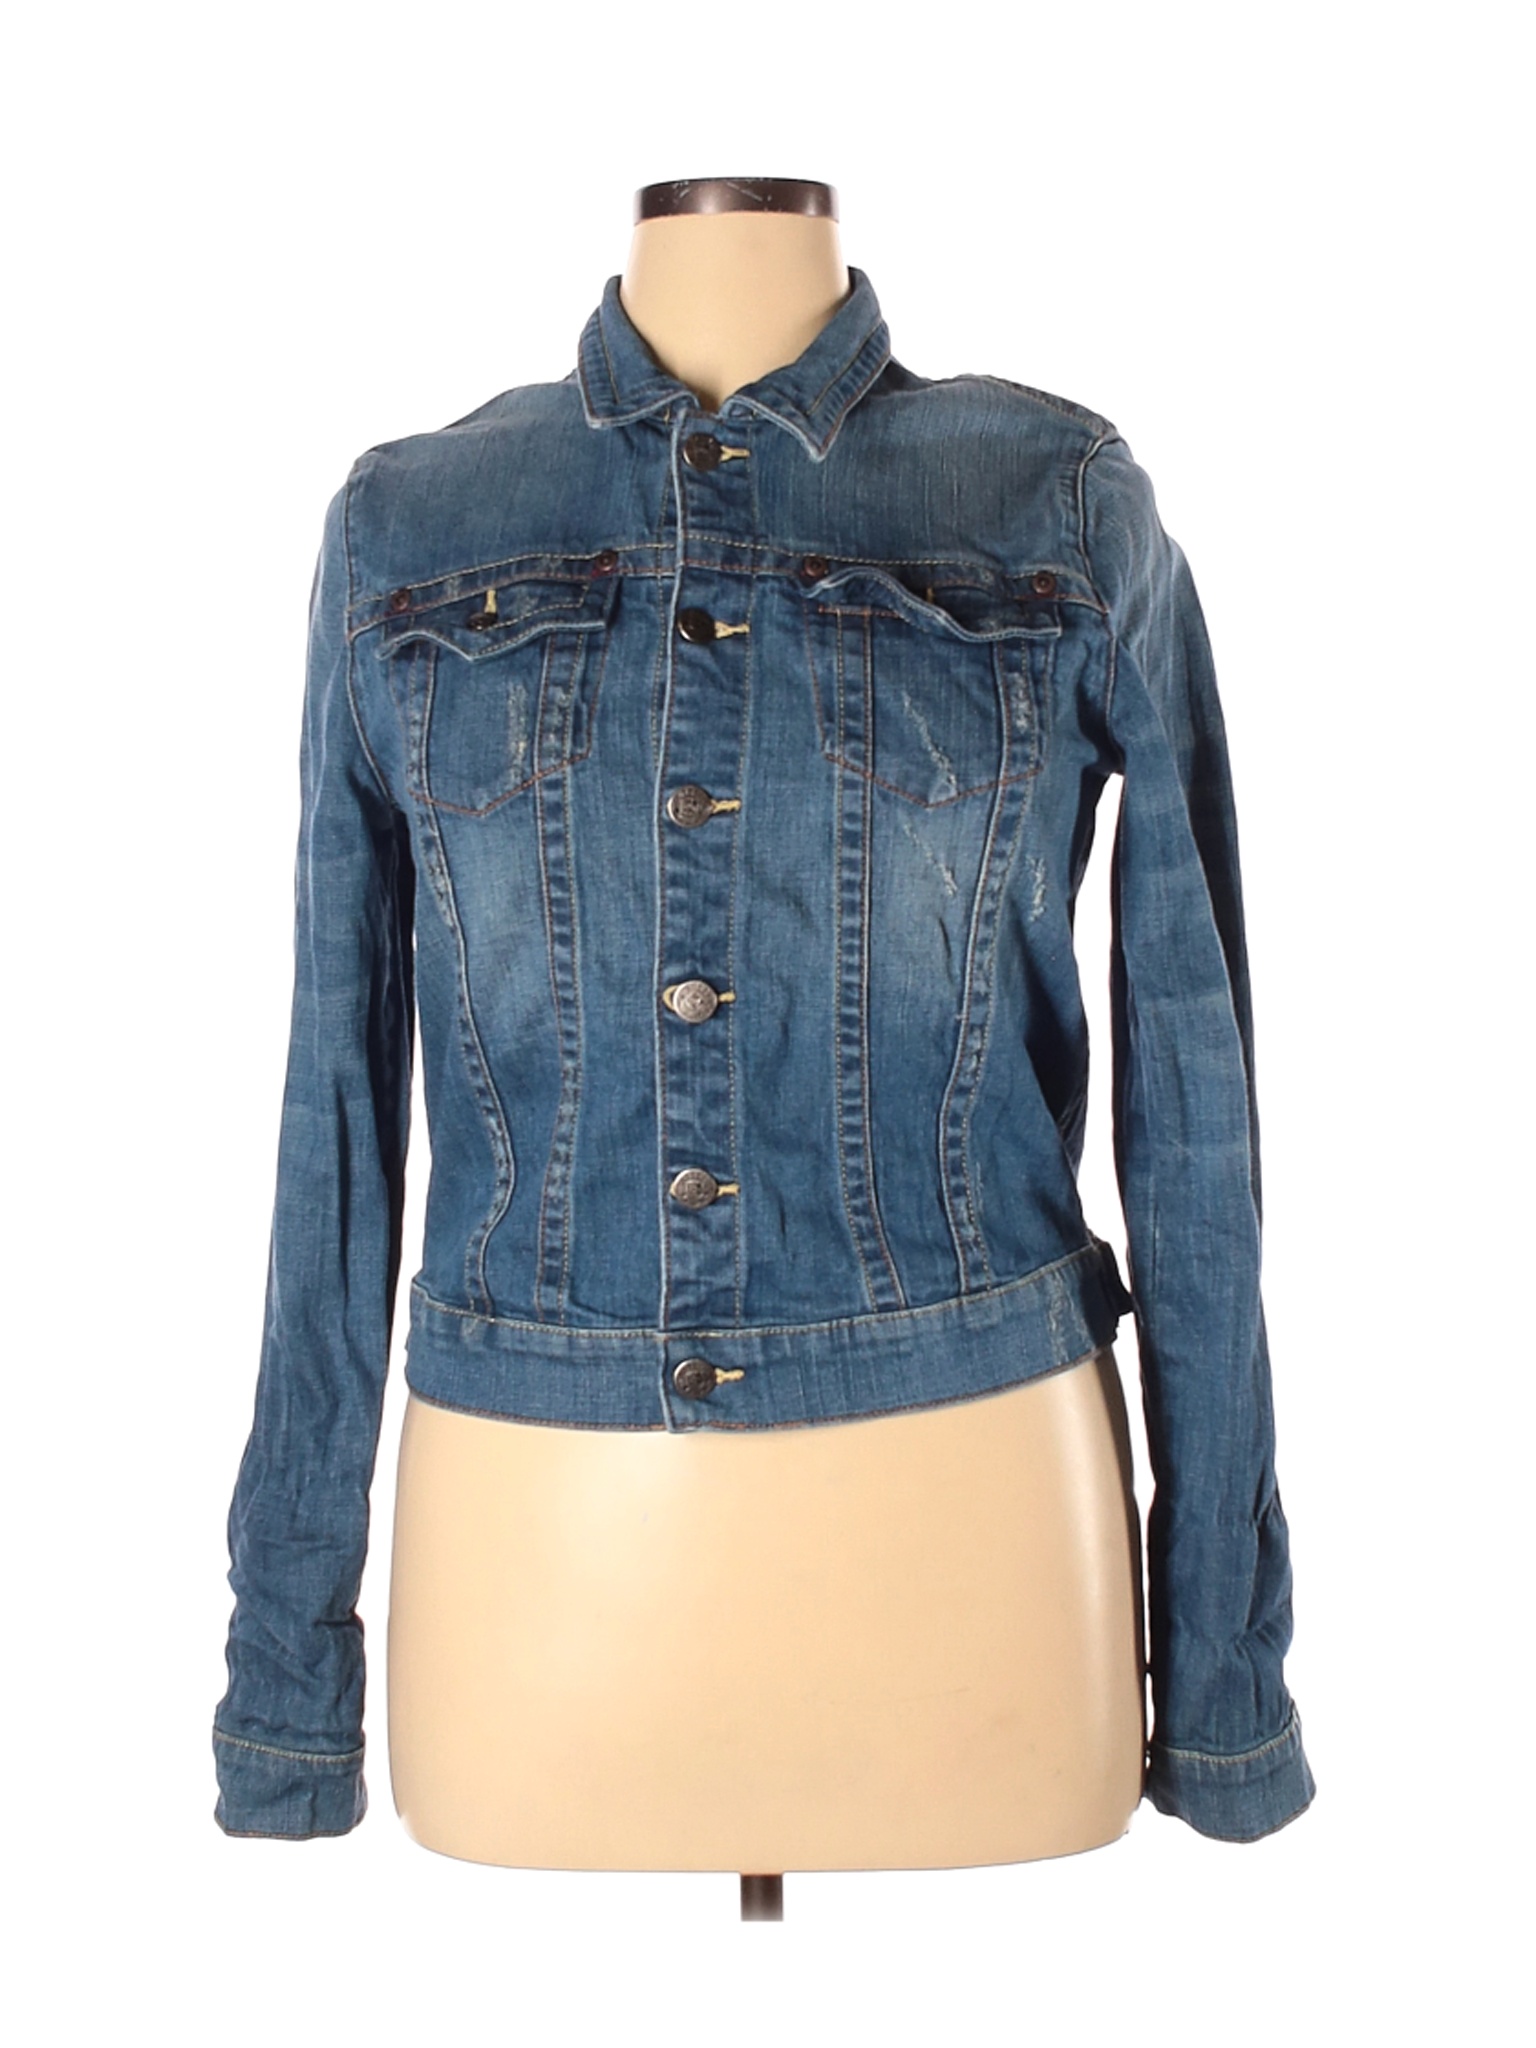 Assorted Brands Women Blue Denim Jacket XL | eBay